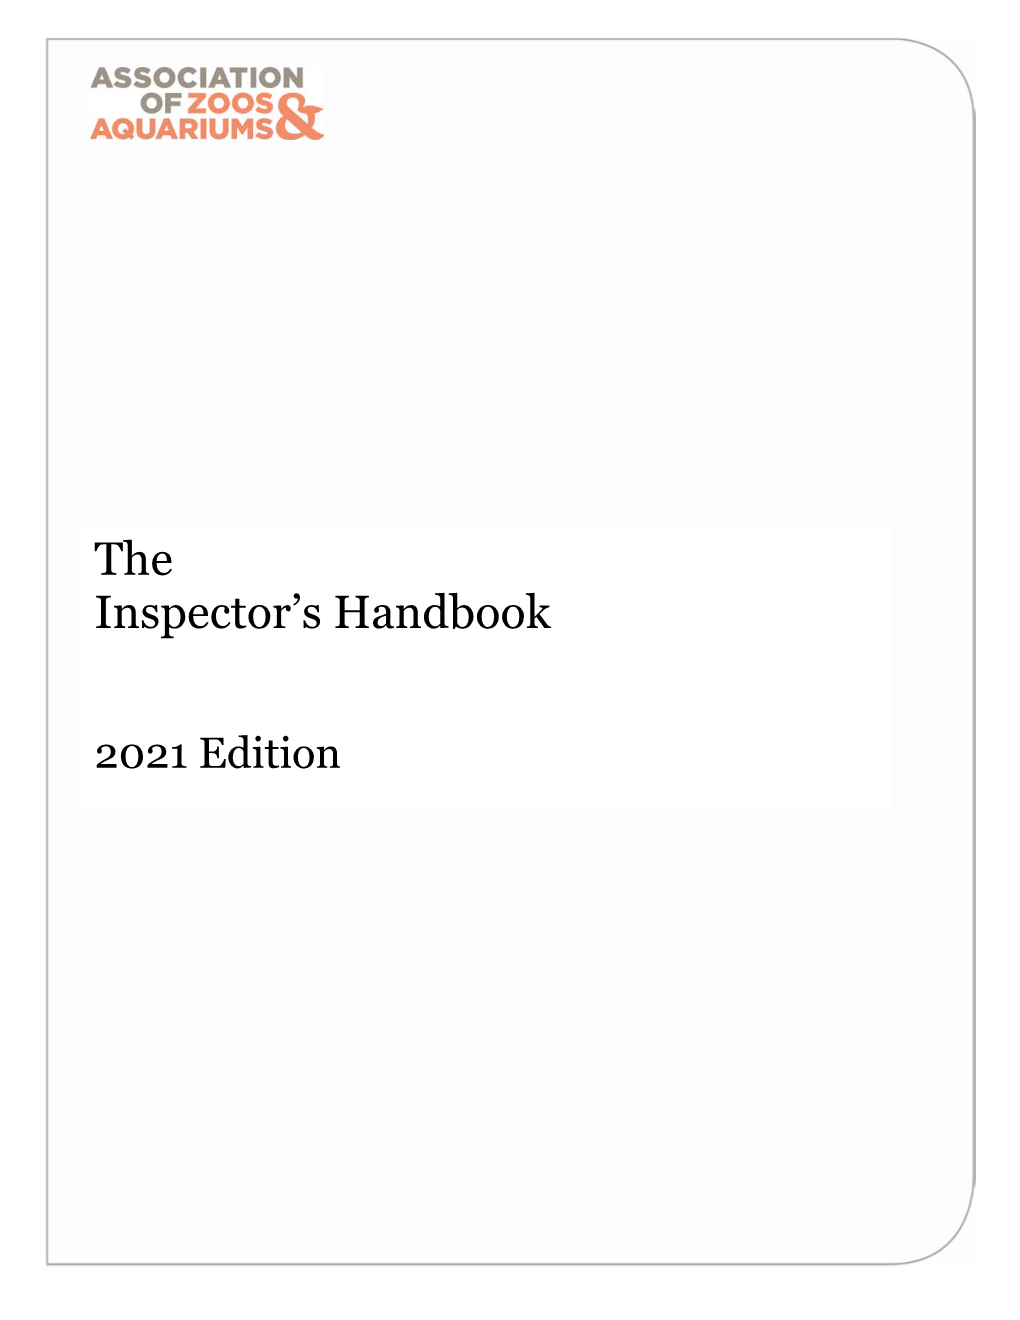 The Inspector's Handbook